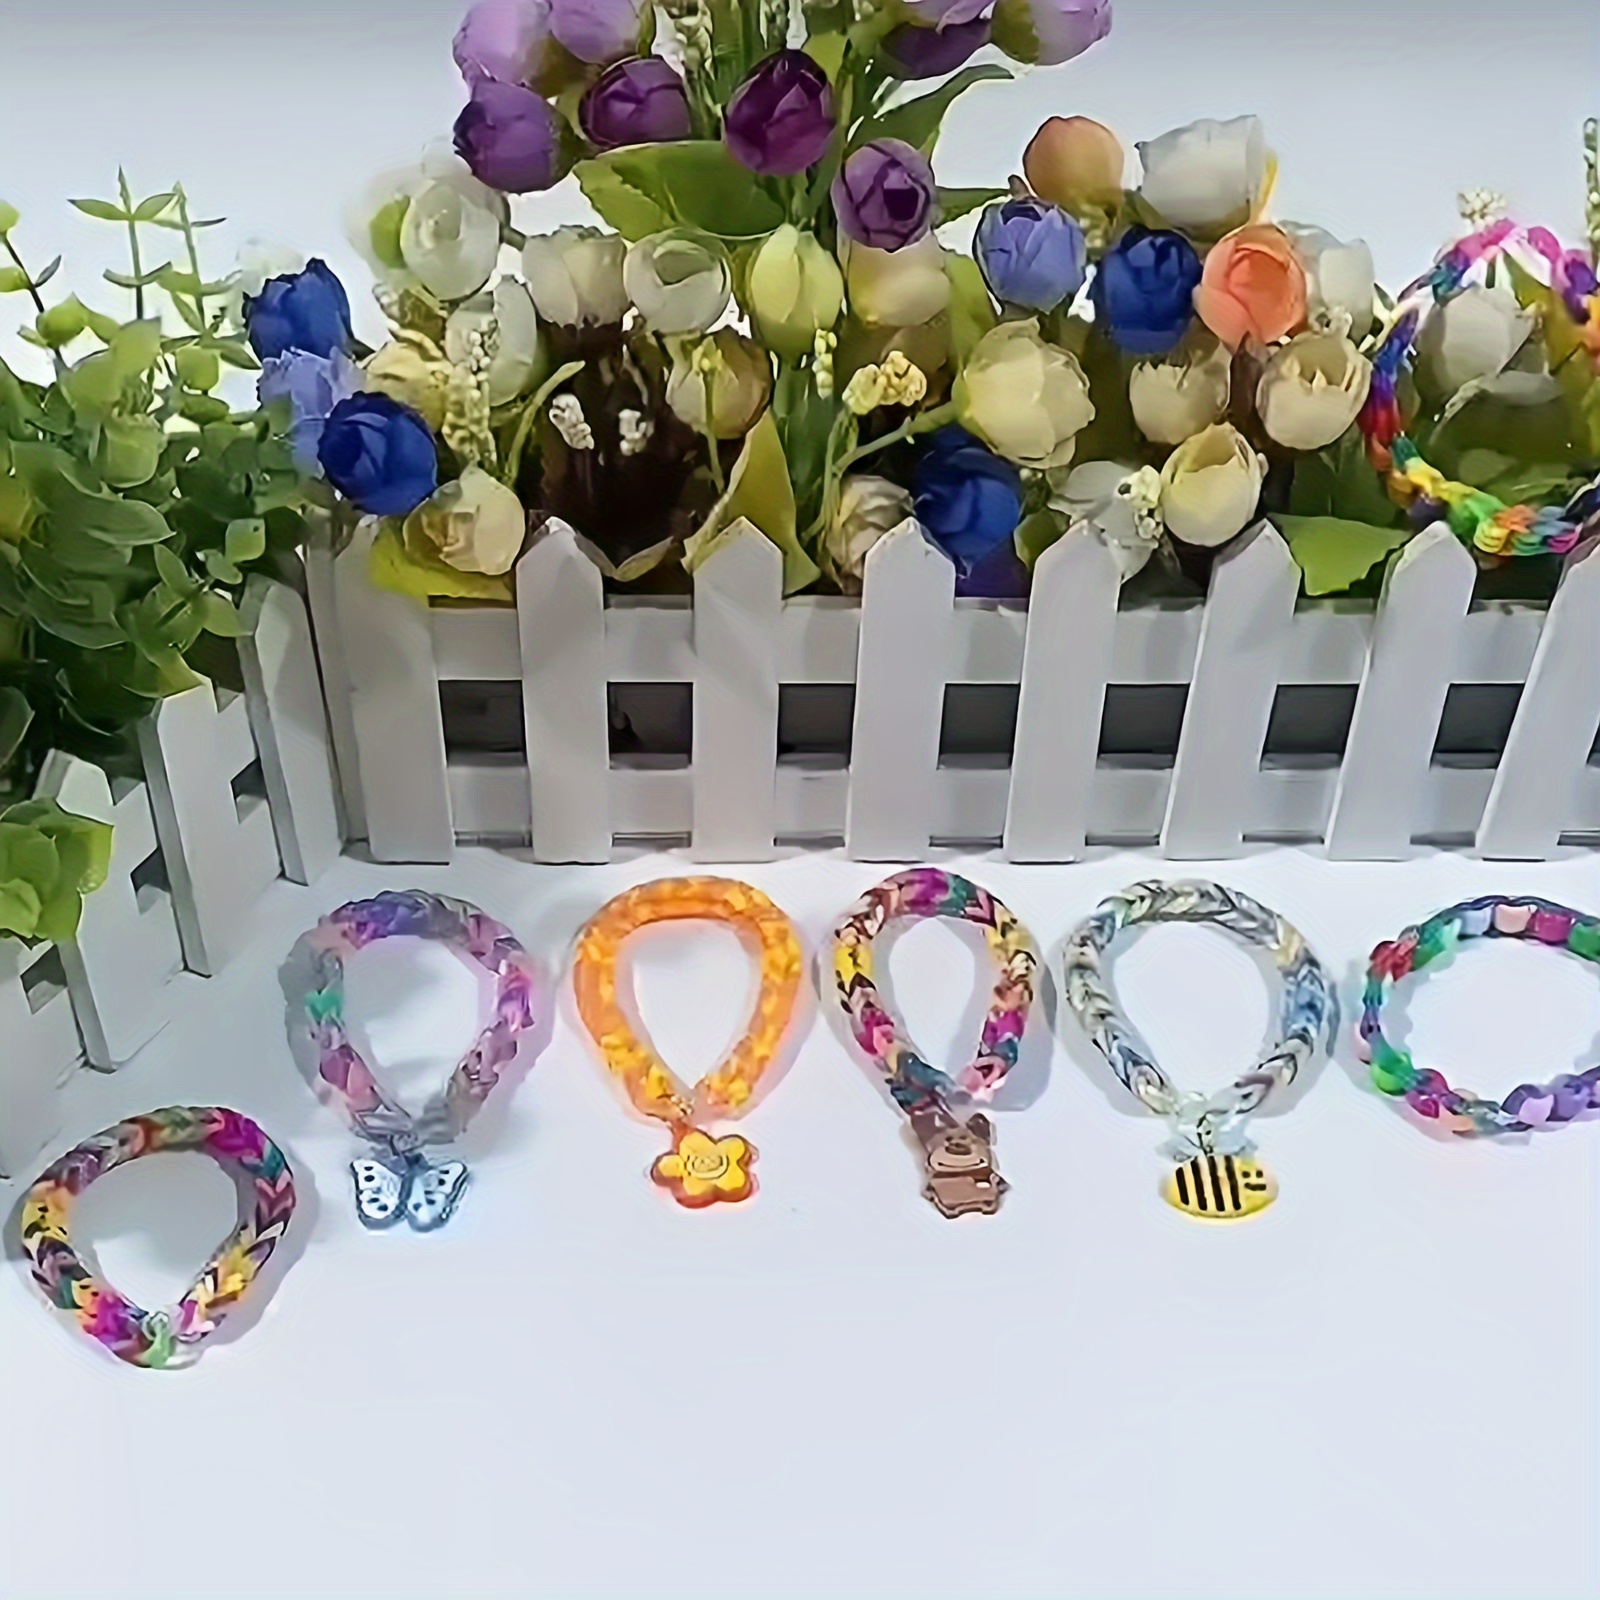 xtieksh Rubber Band Bracelet Kit, Loom Bracelet Making Kit for Kids Weaving  DIY Crafting Gift